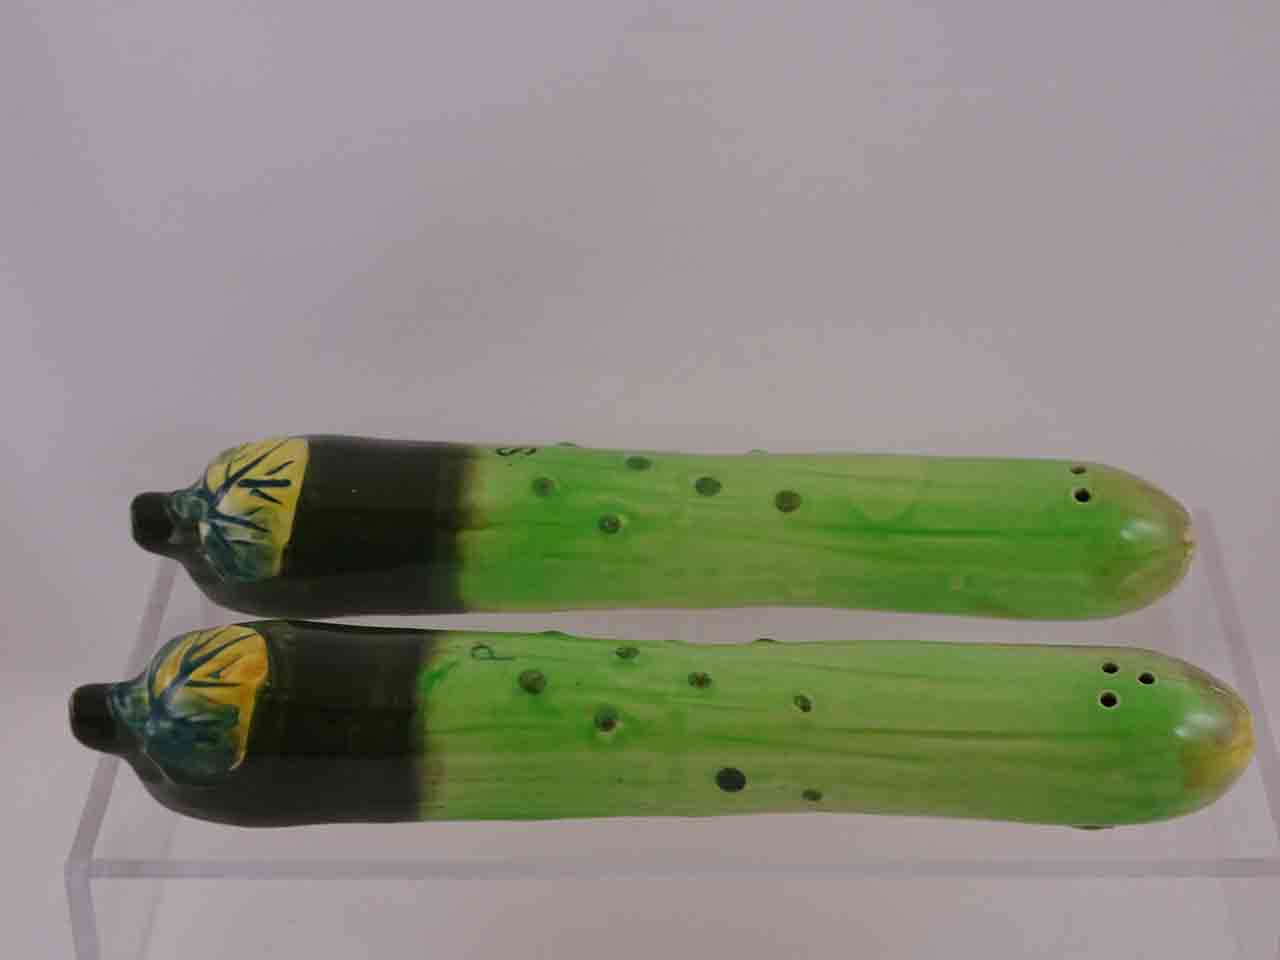 Long boy vegetable series of salt and pepper shakers - cucumbers